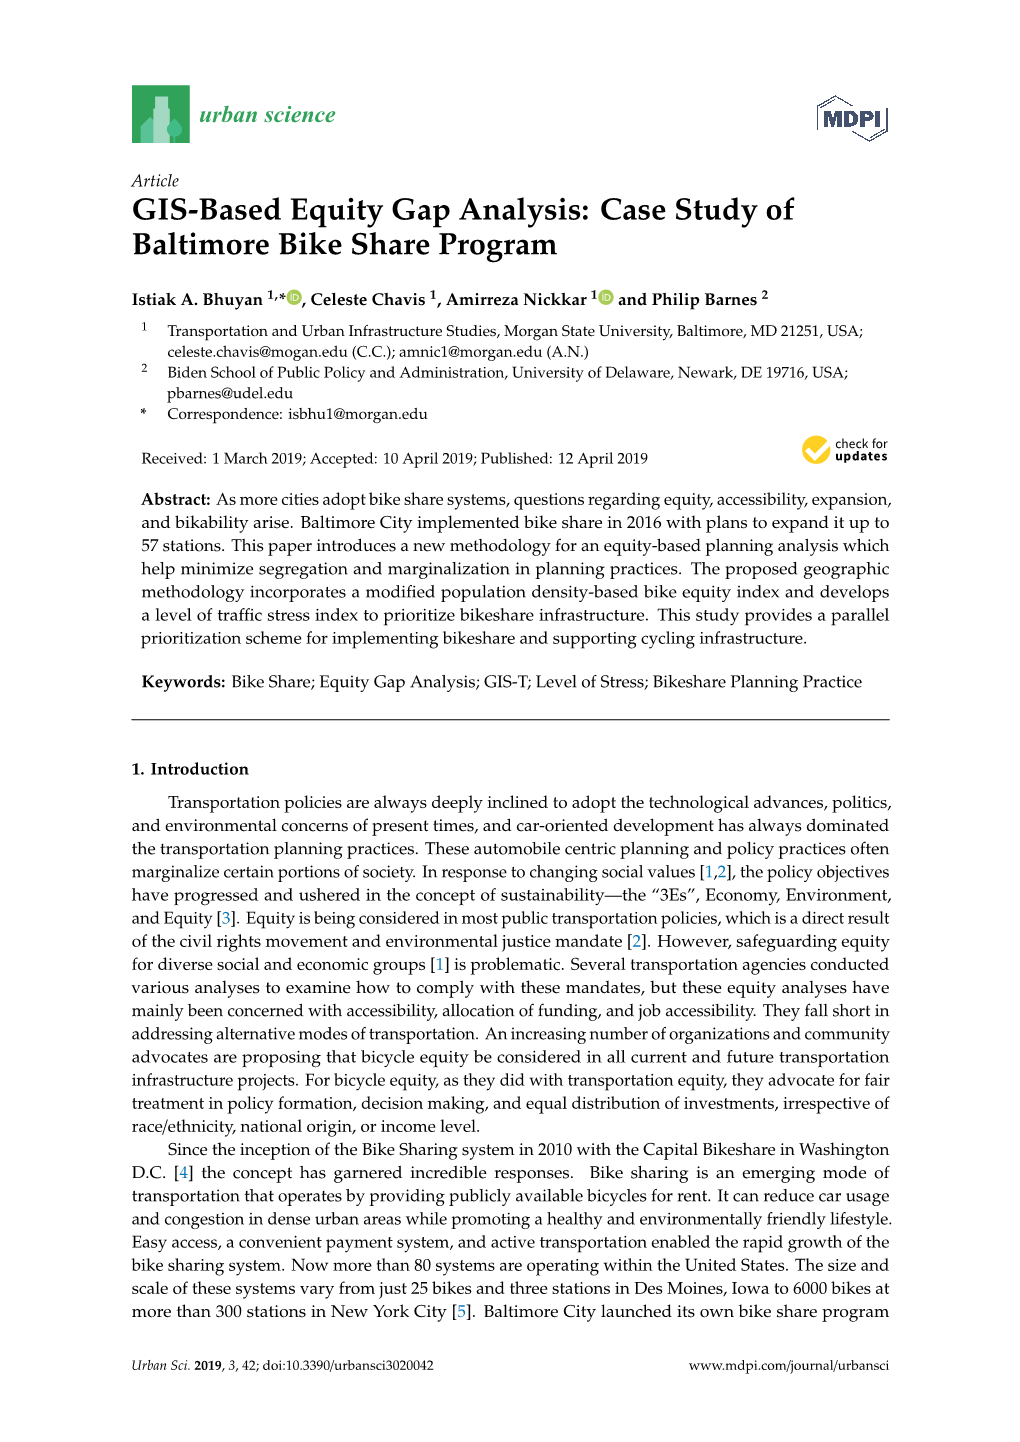 GIS-Based Equity Gap Analysis: Case Study of Baltimore Bike Share Program